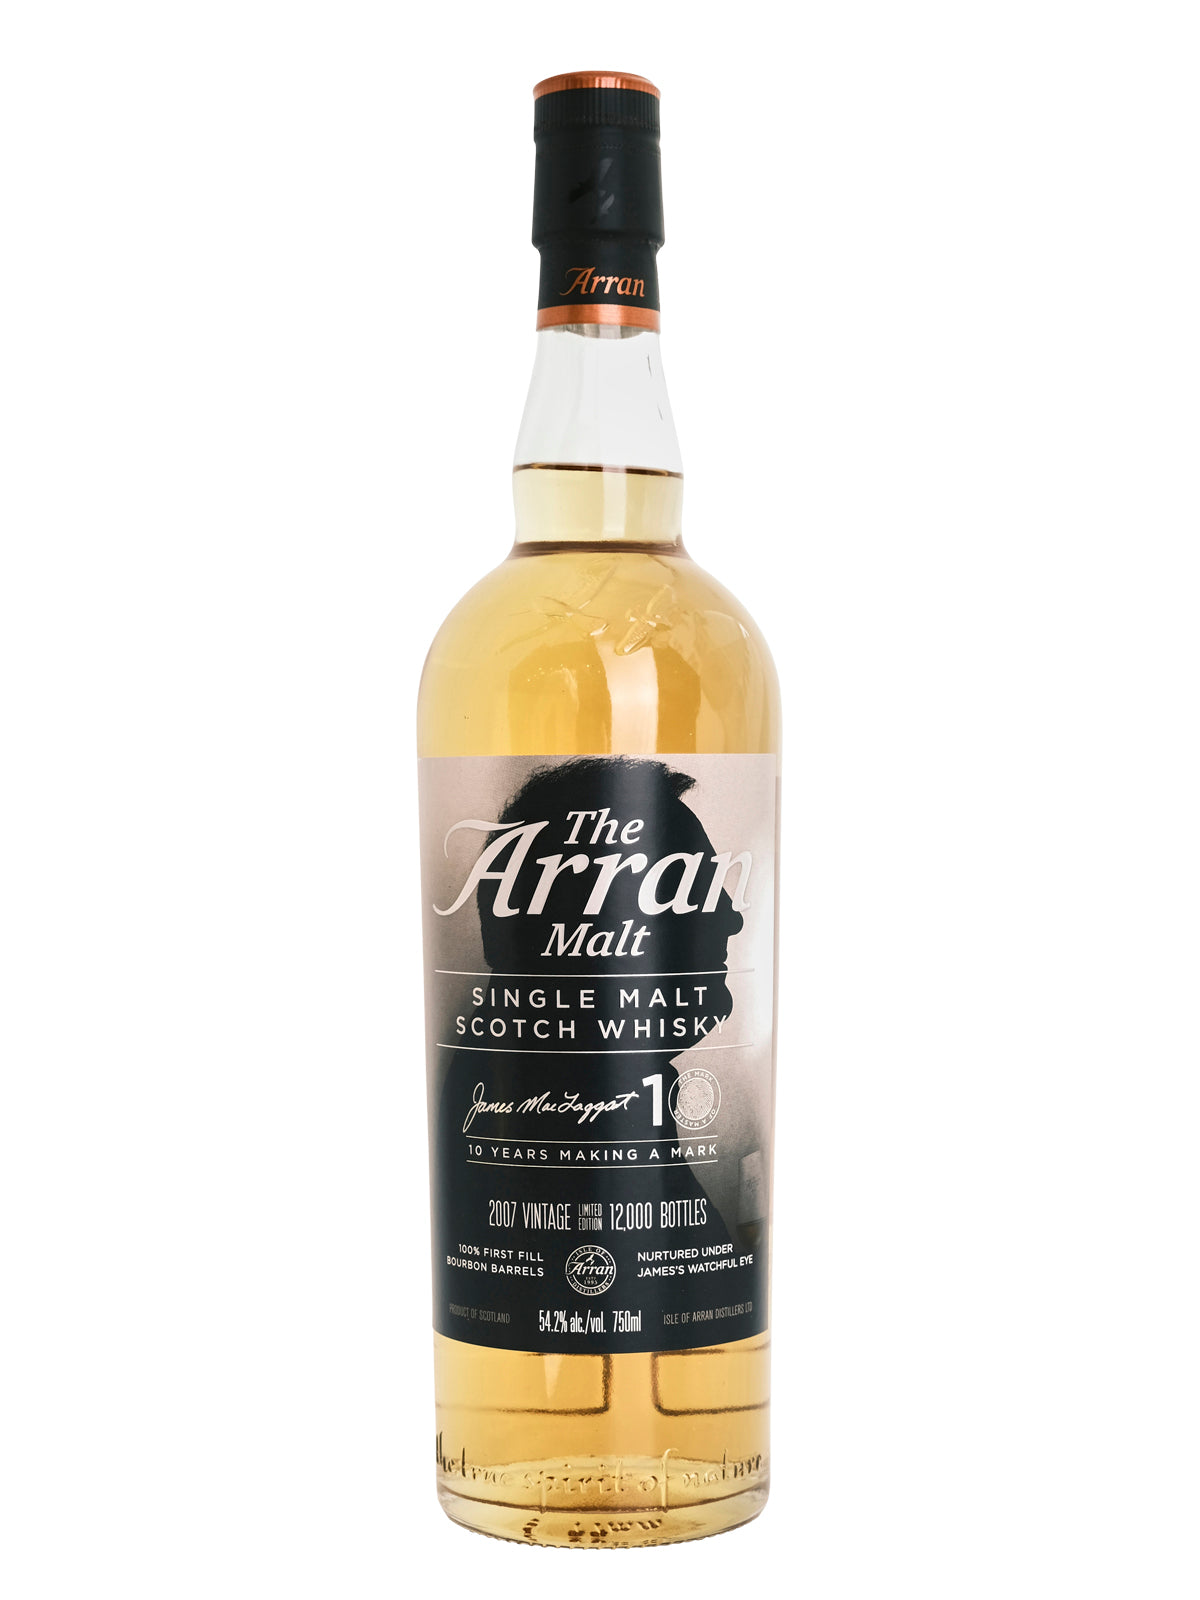 The Arran Malt "James MacTaggart" Single Malt Scotch Whisky (Scotland)